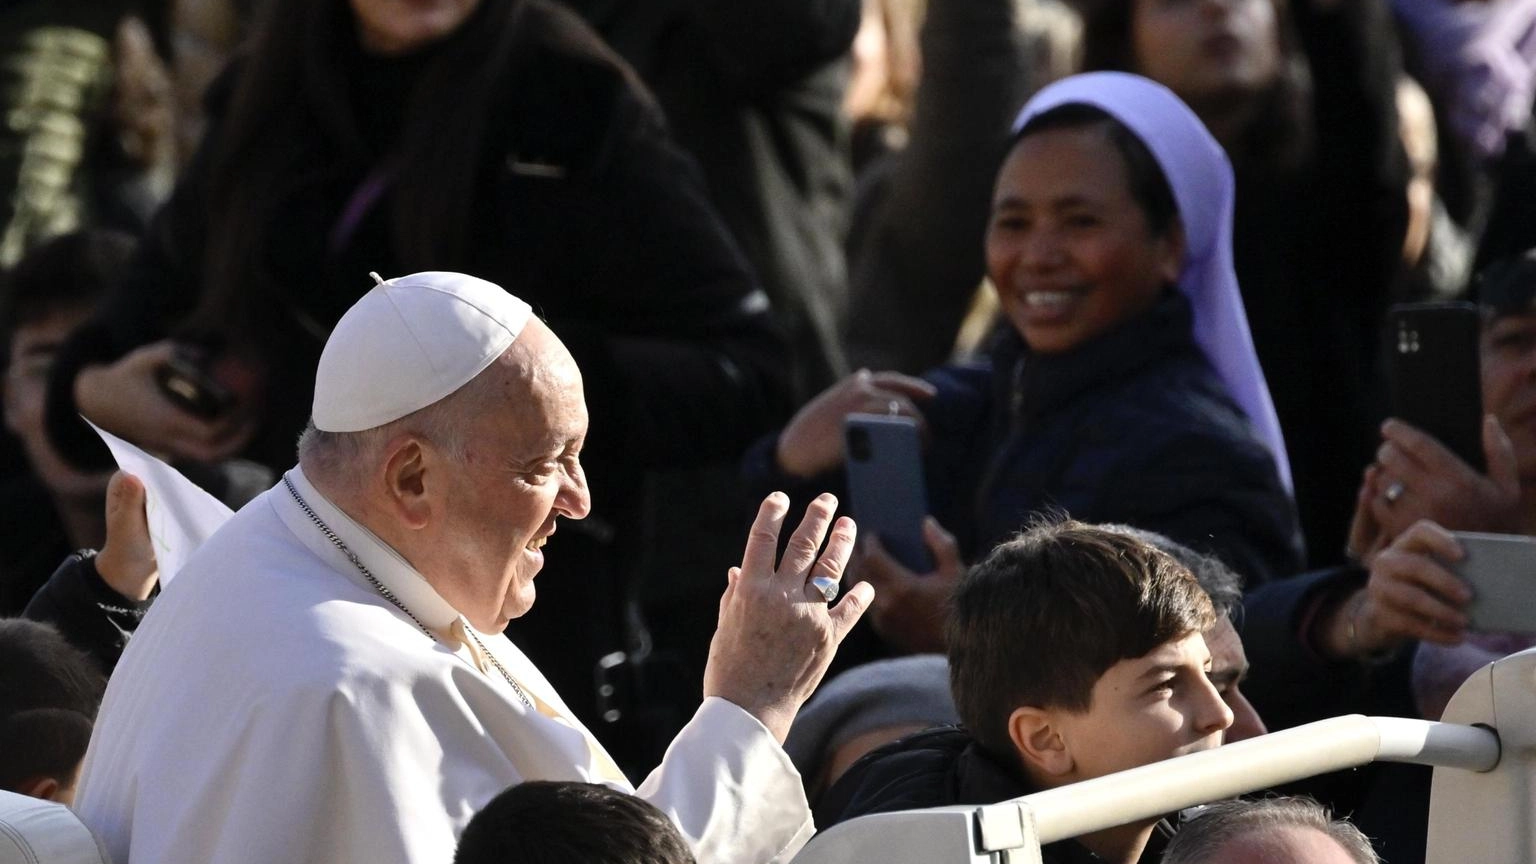 Il Papa ha l'influenza, udienze sospese, sottoposto a Tac